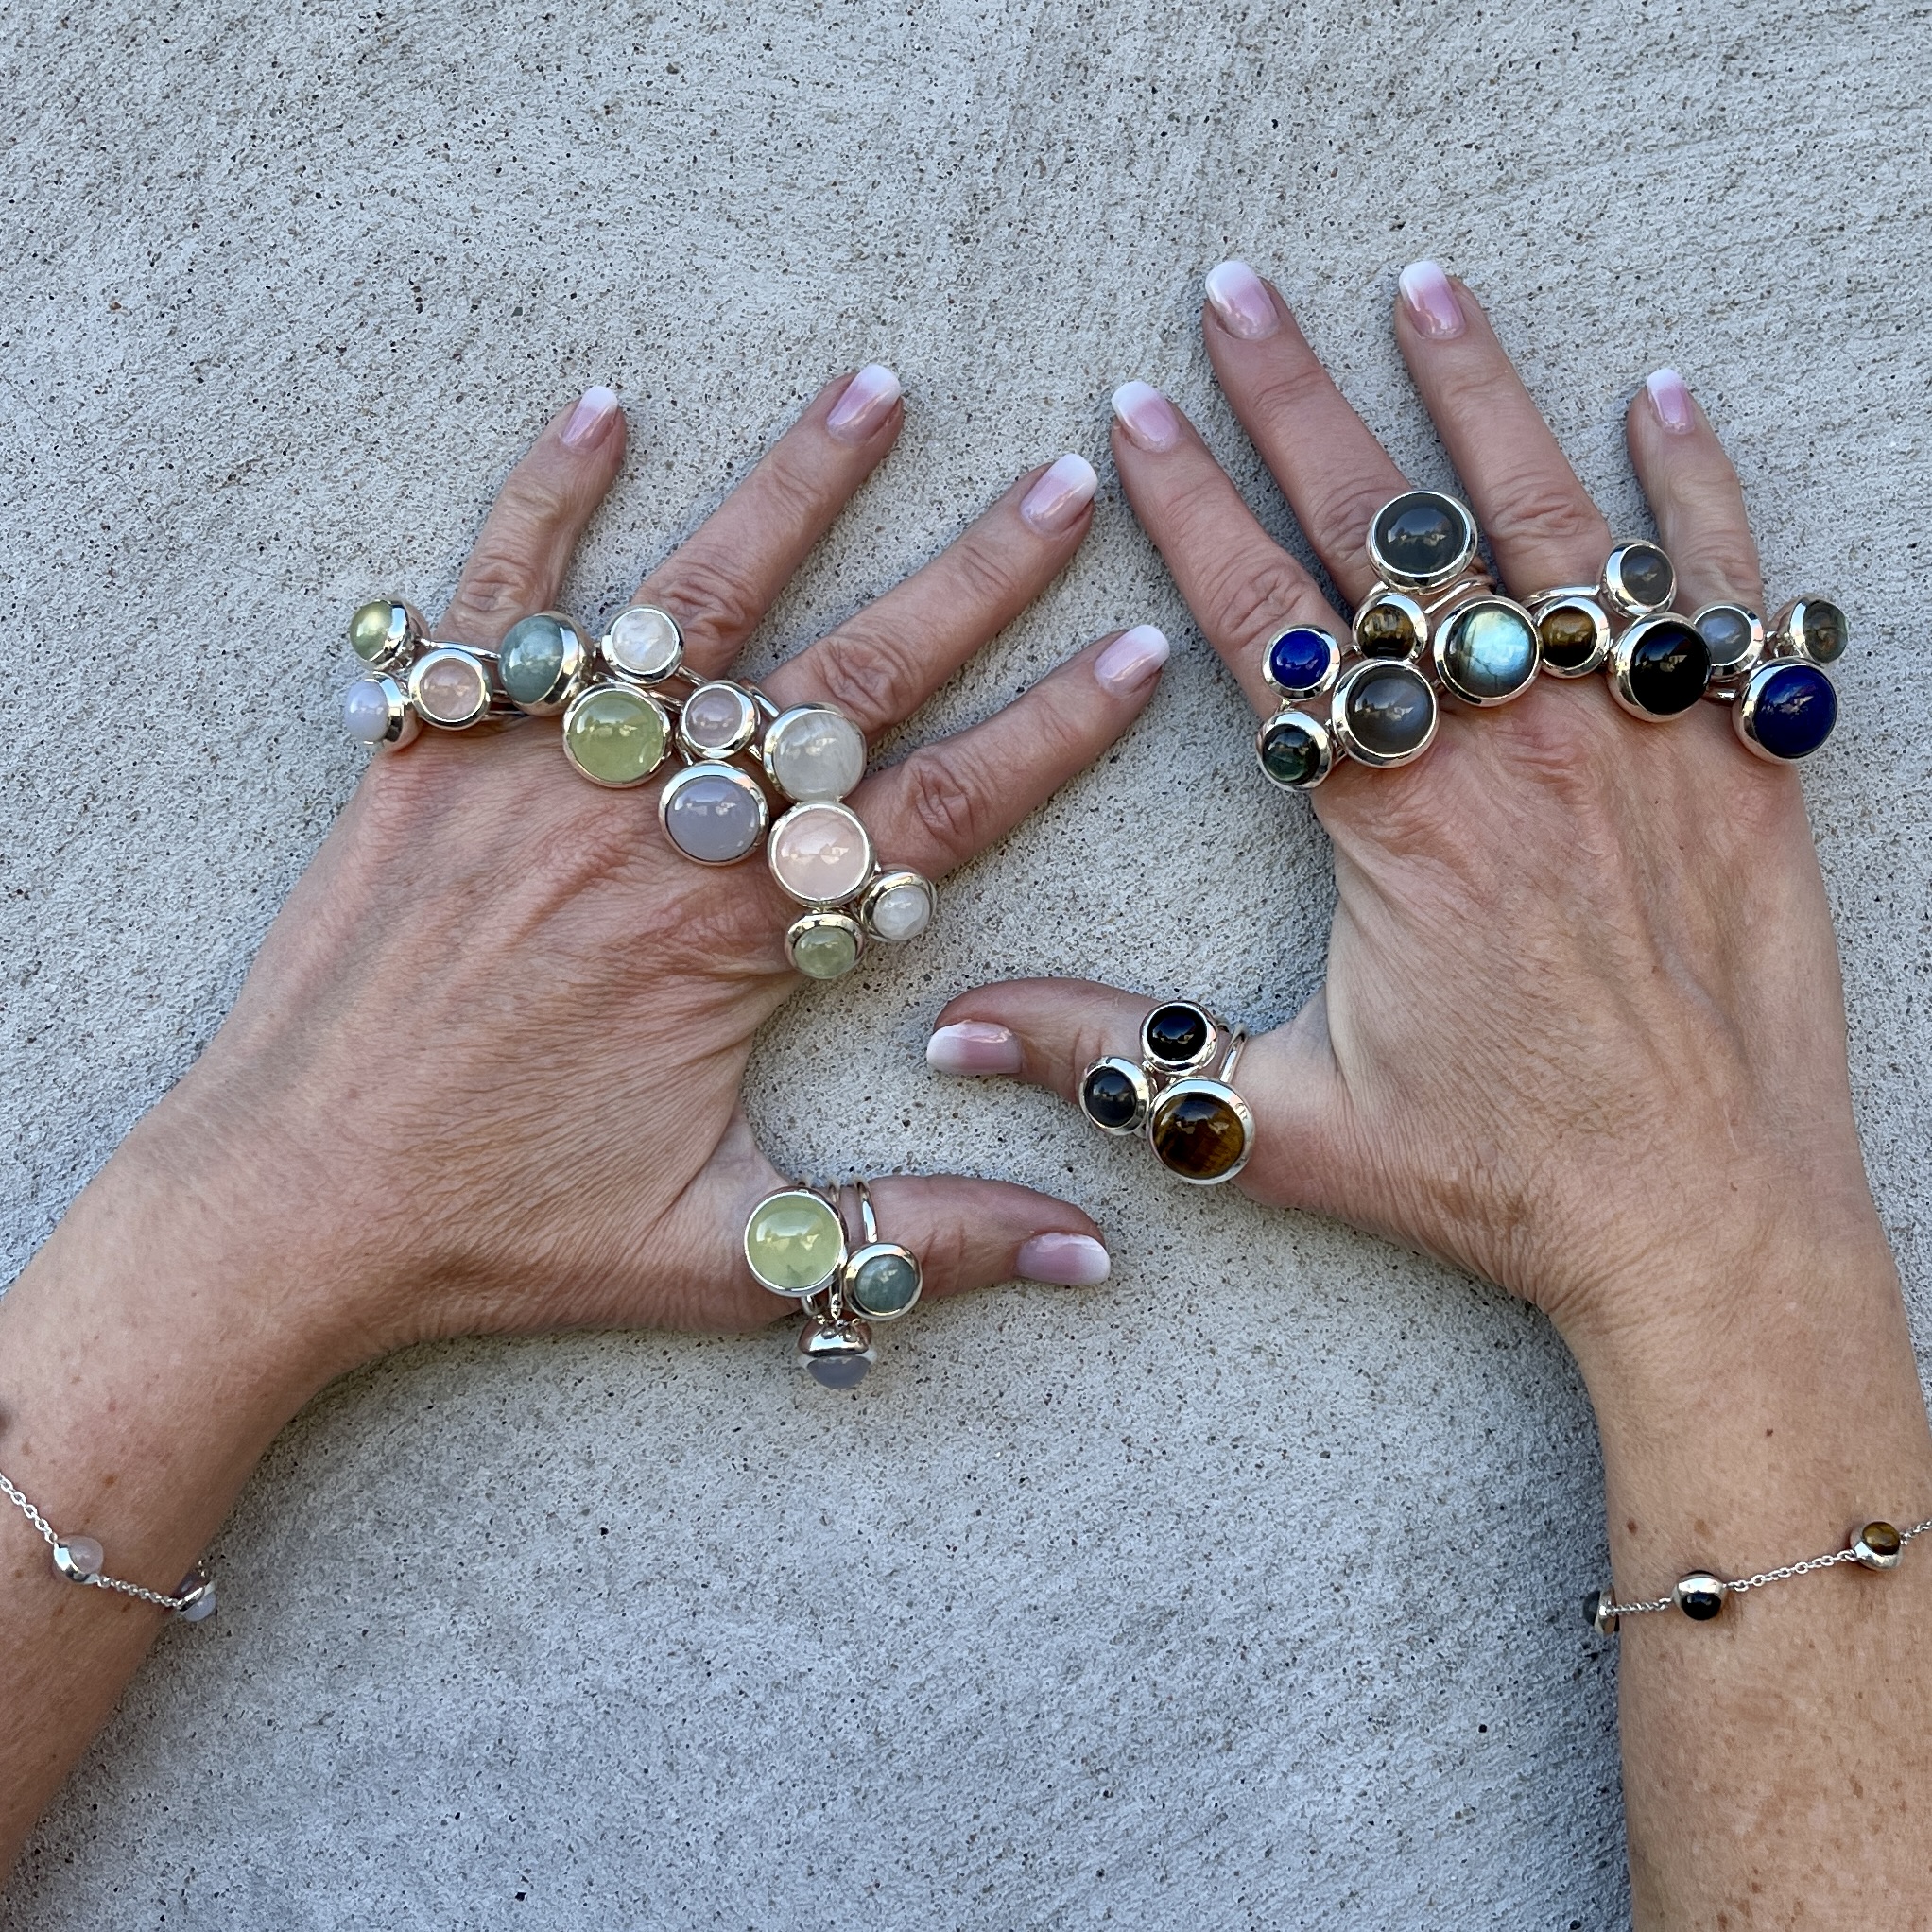 Silverringar med naturliga stenar och matchande silverarmband, mixa och matcha. Silver rings with natural stones and matching silver bracelet, mix and match.